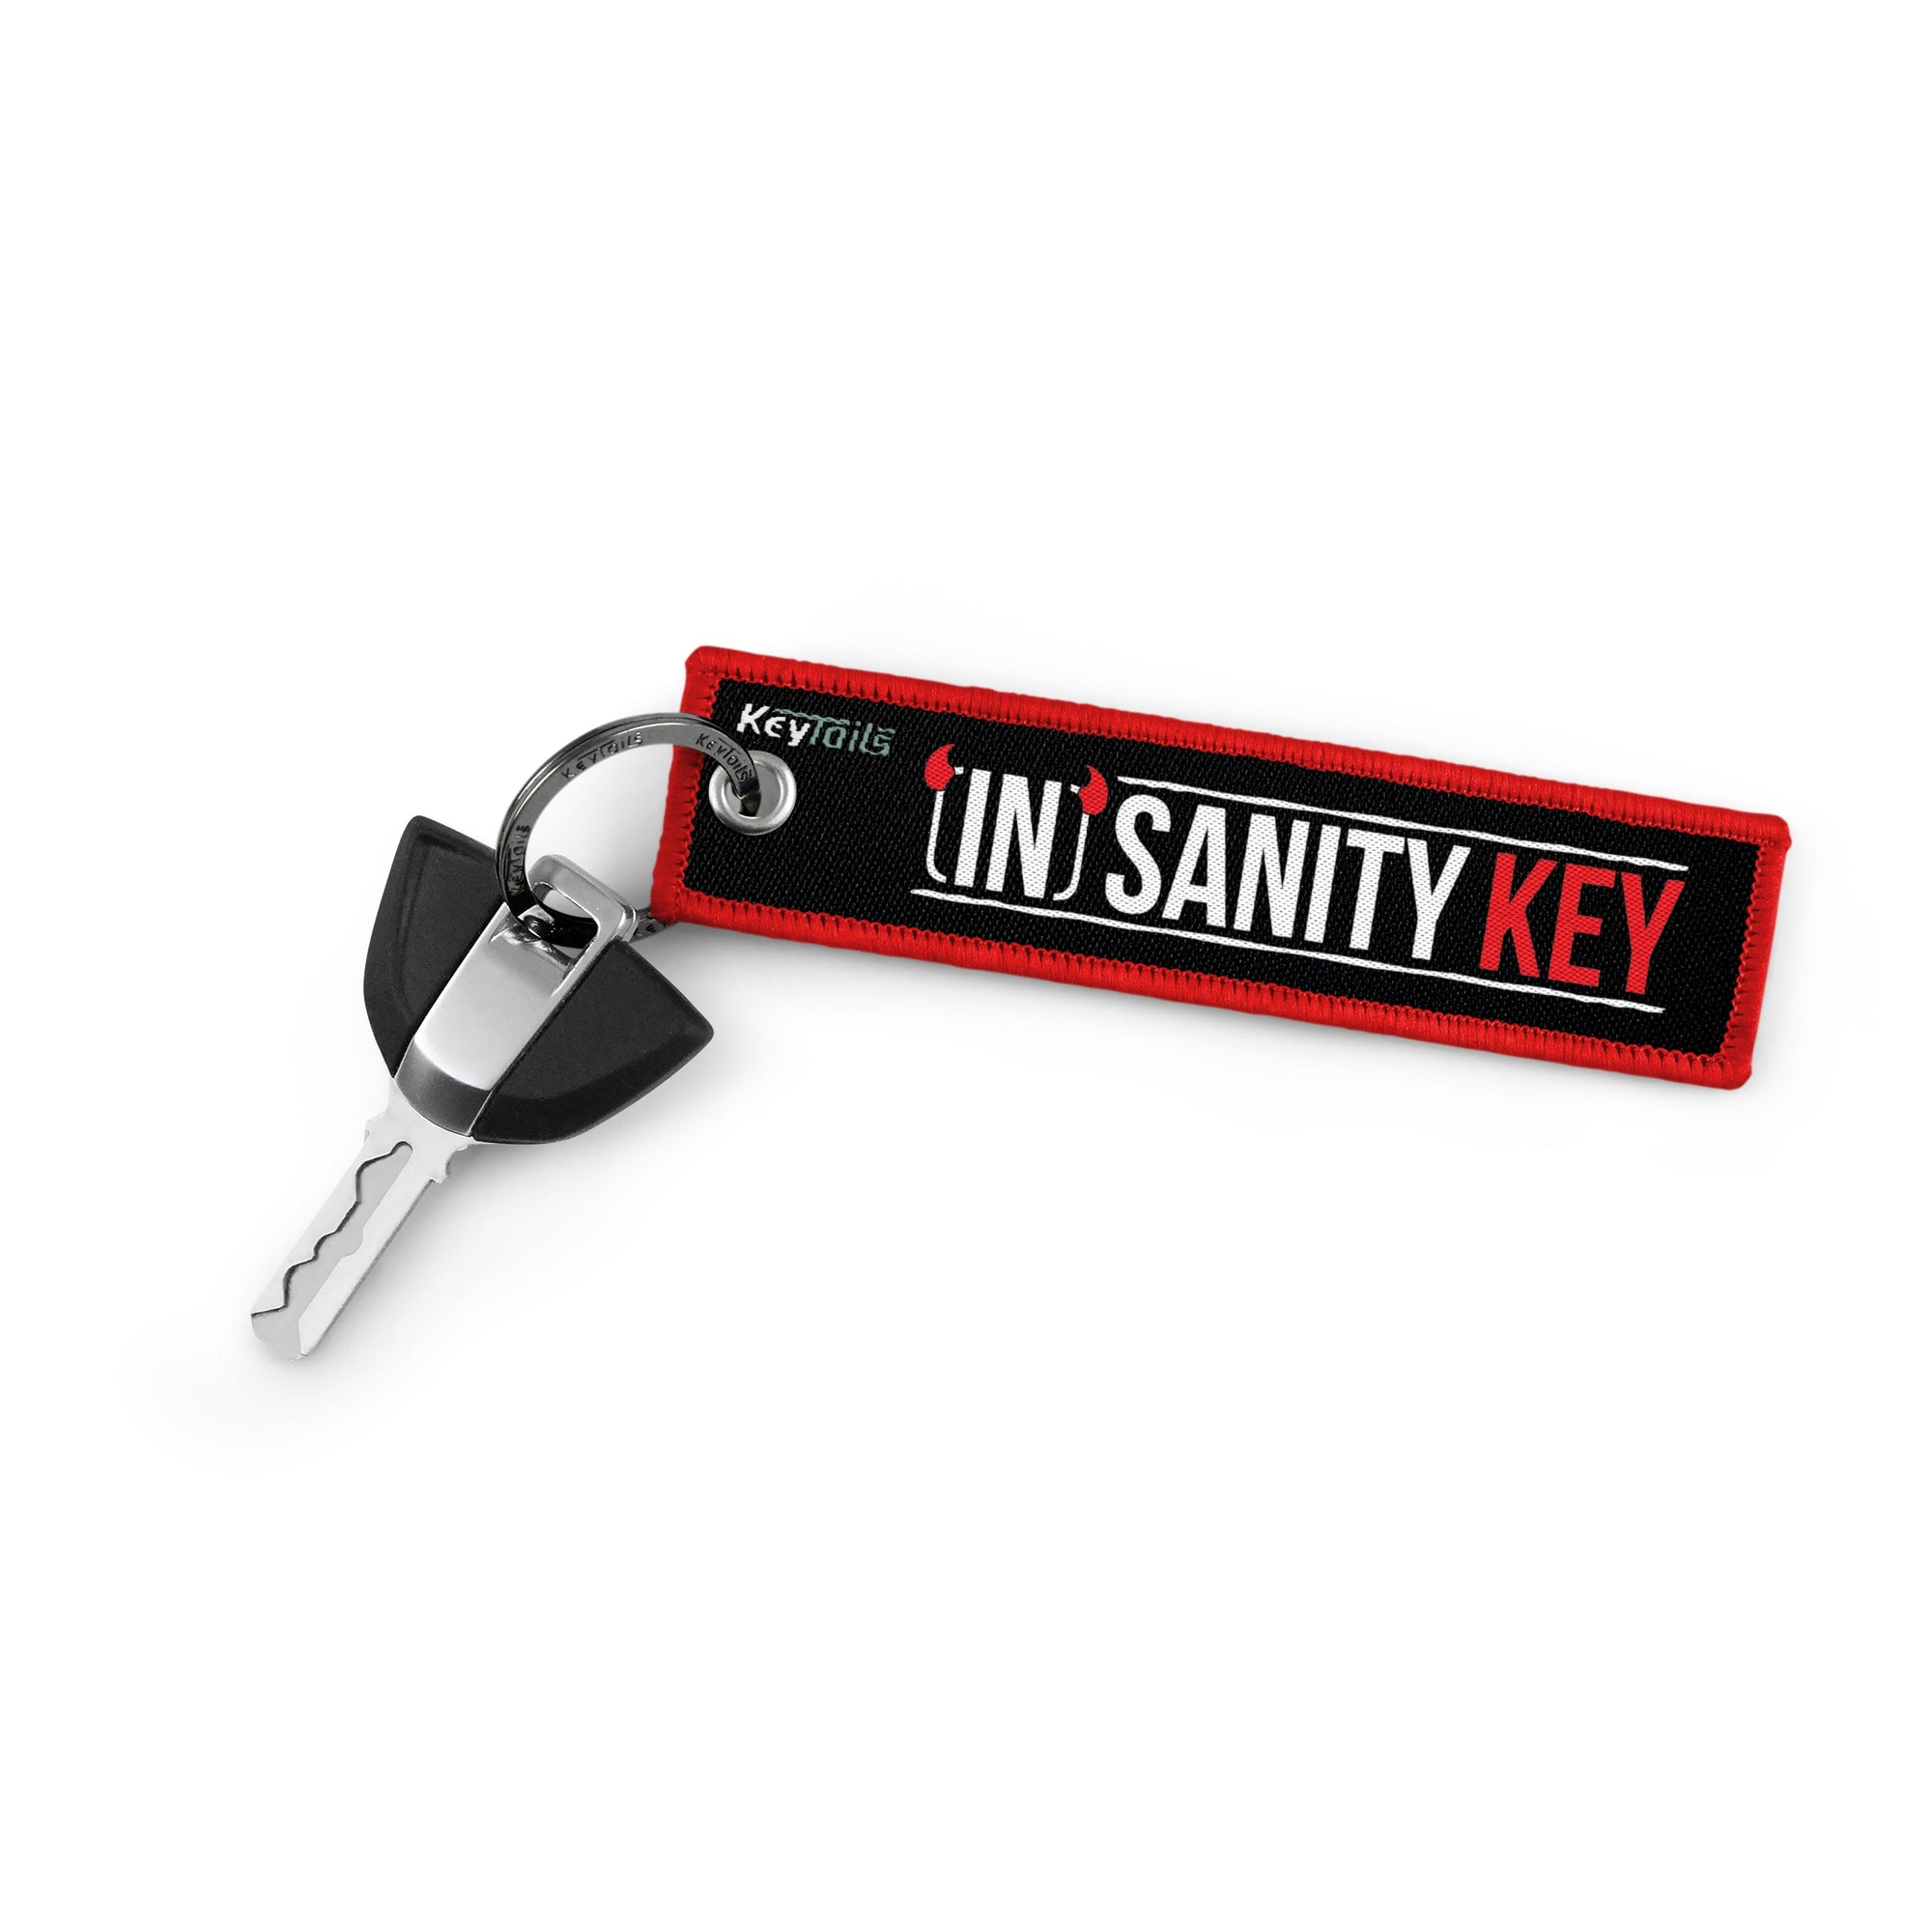 InSanity Key Keychain, Key Tag - Red